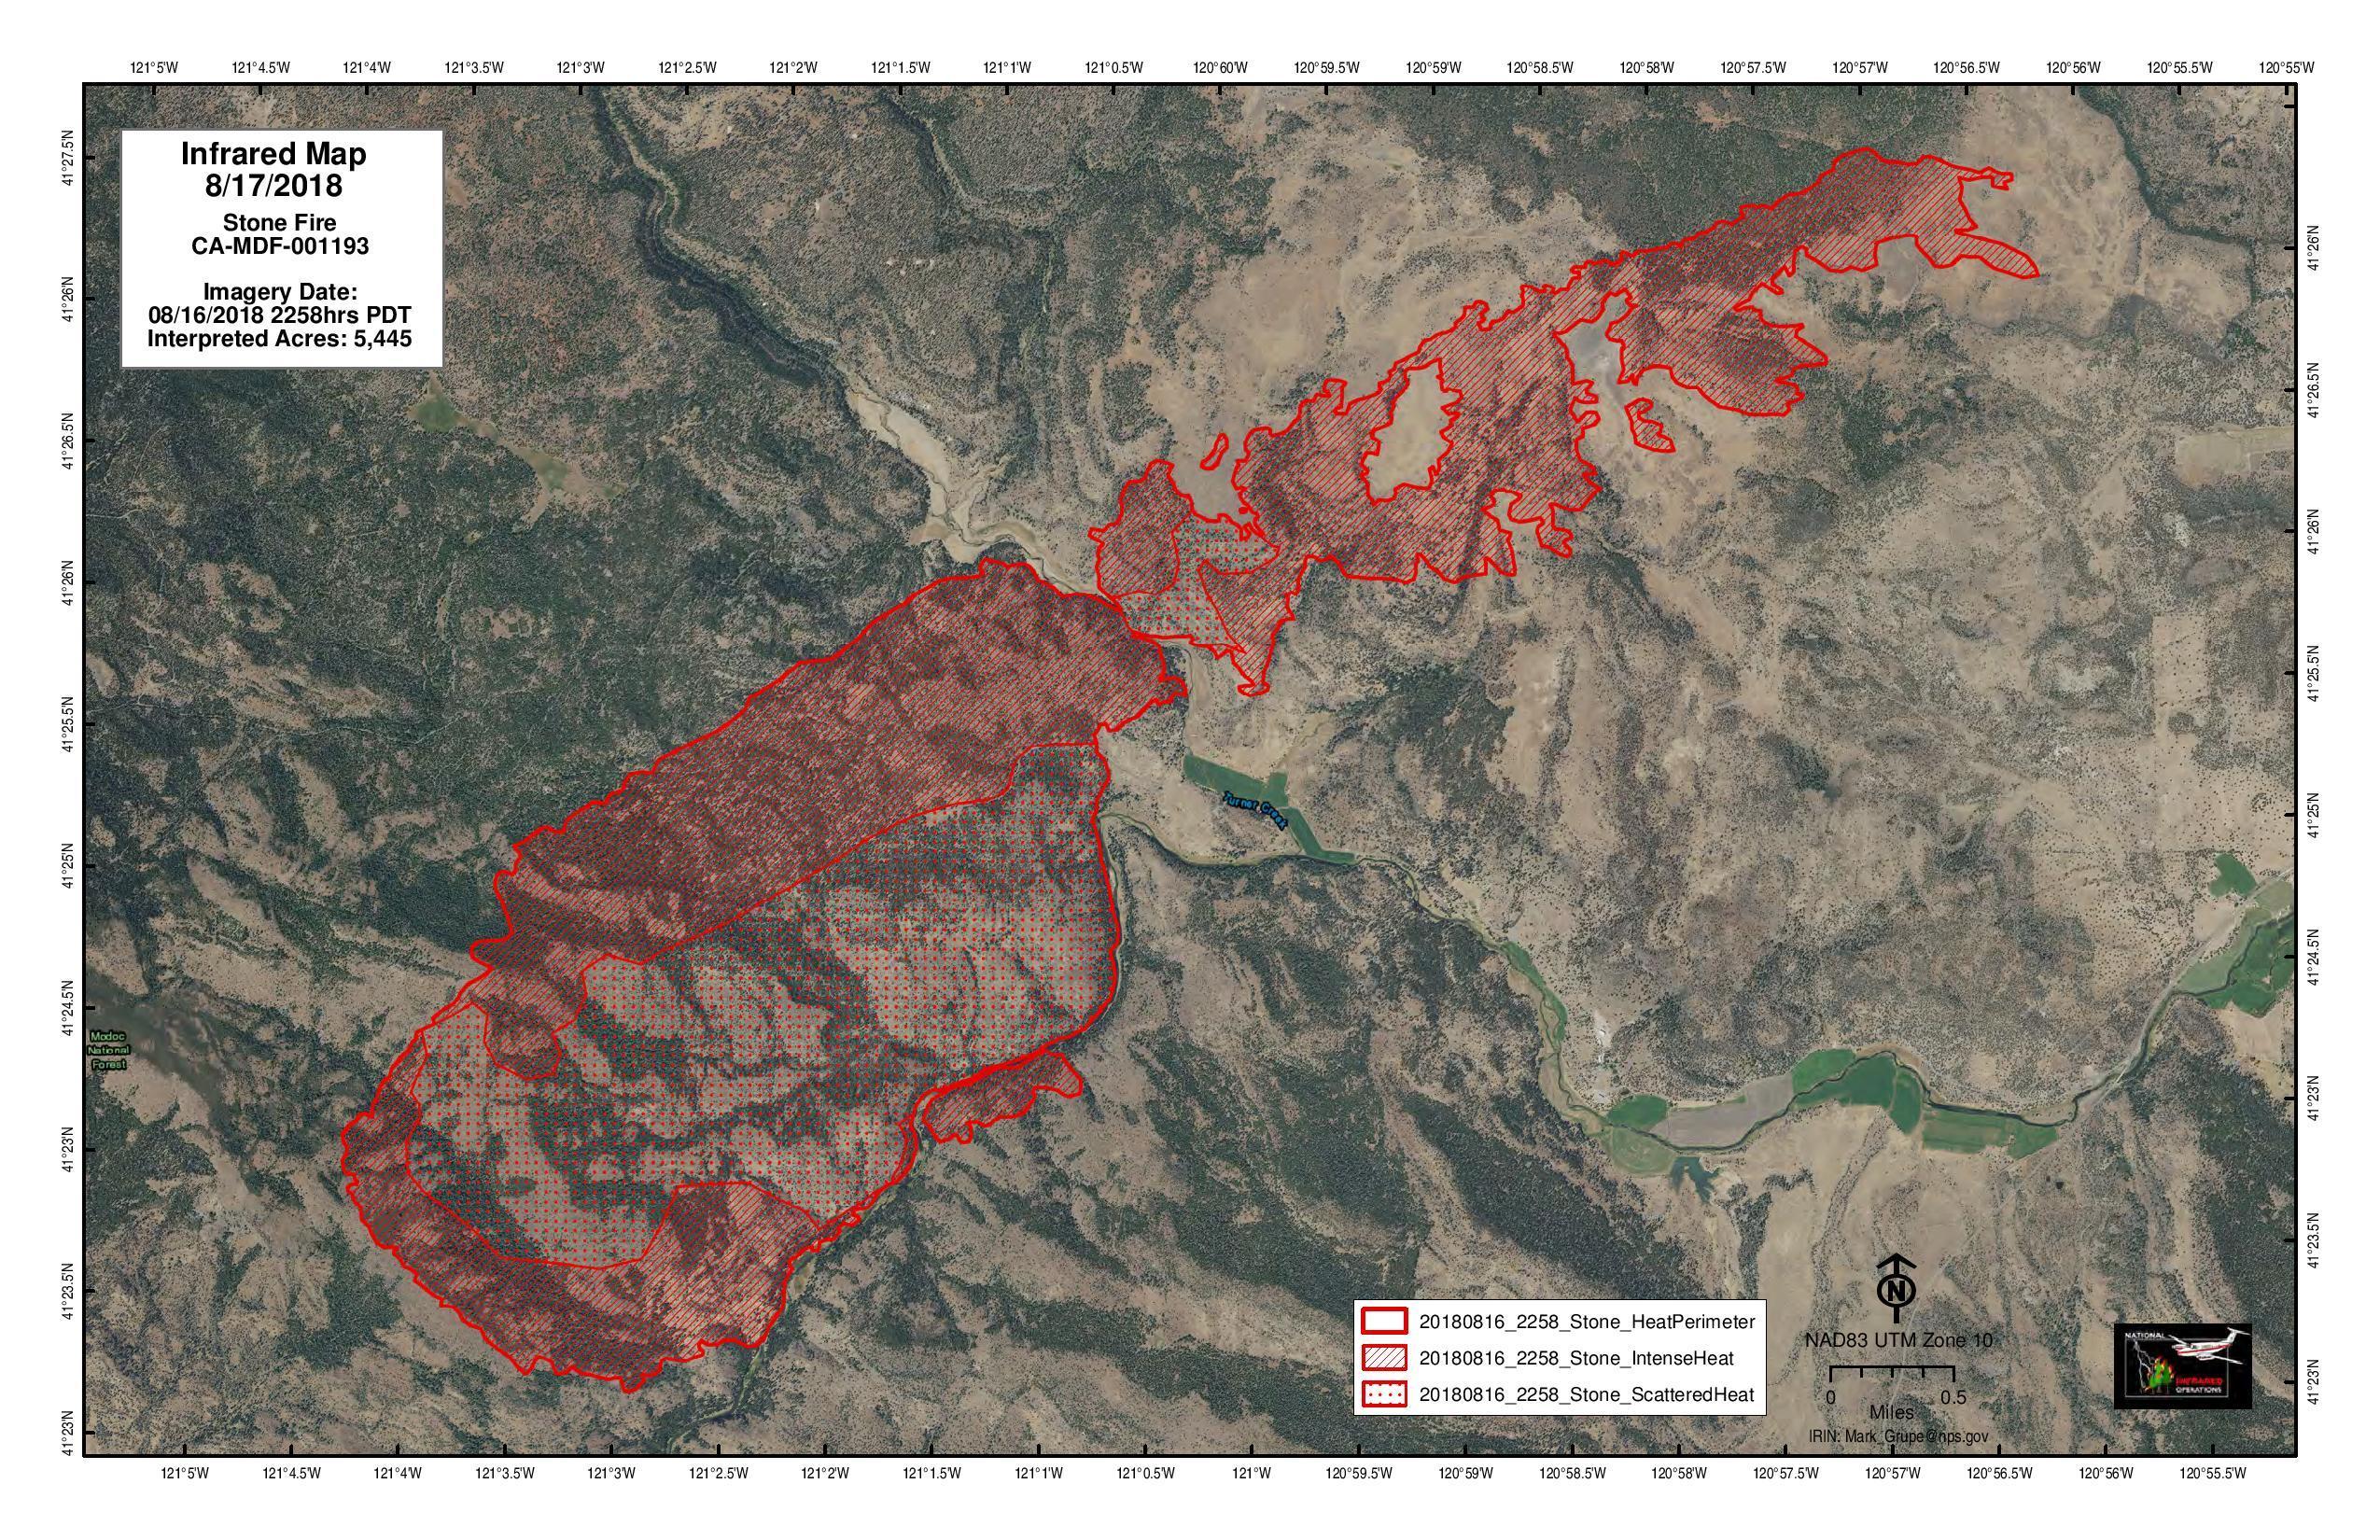 wildfire map california